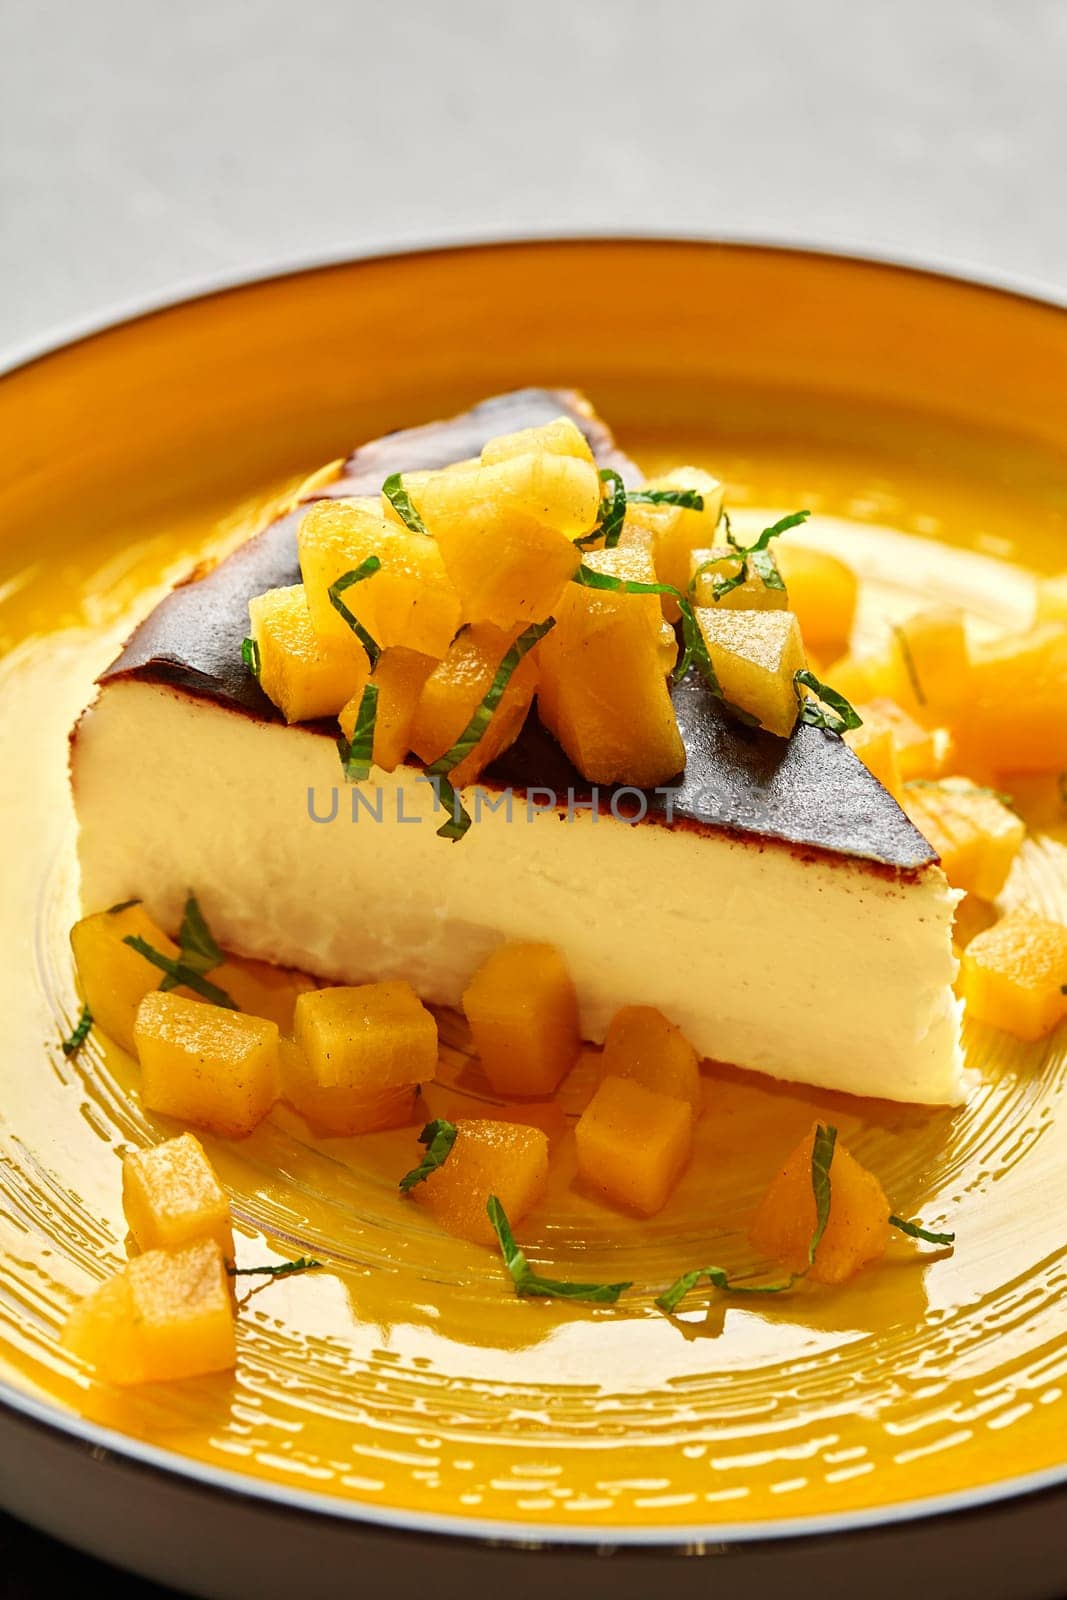 Slice of cheesecake with caramelized mango cubes and mint by nazarovsergey